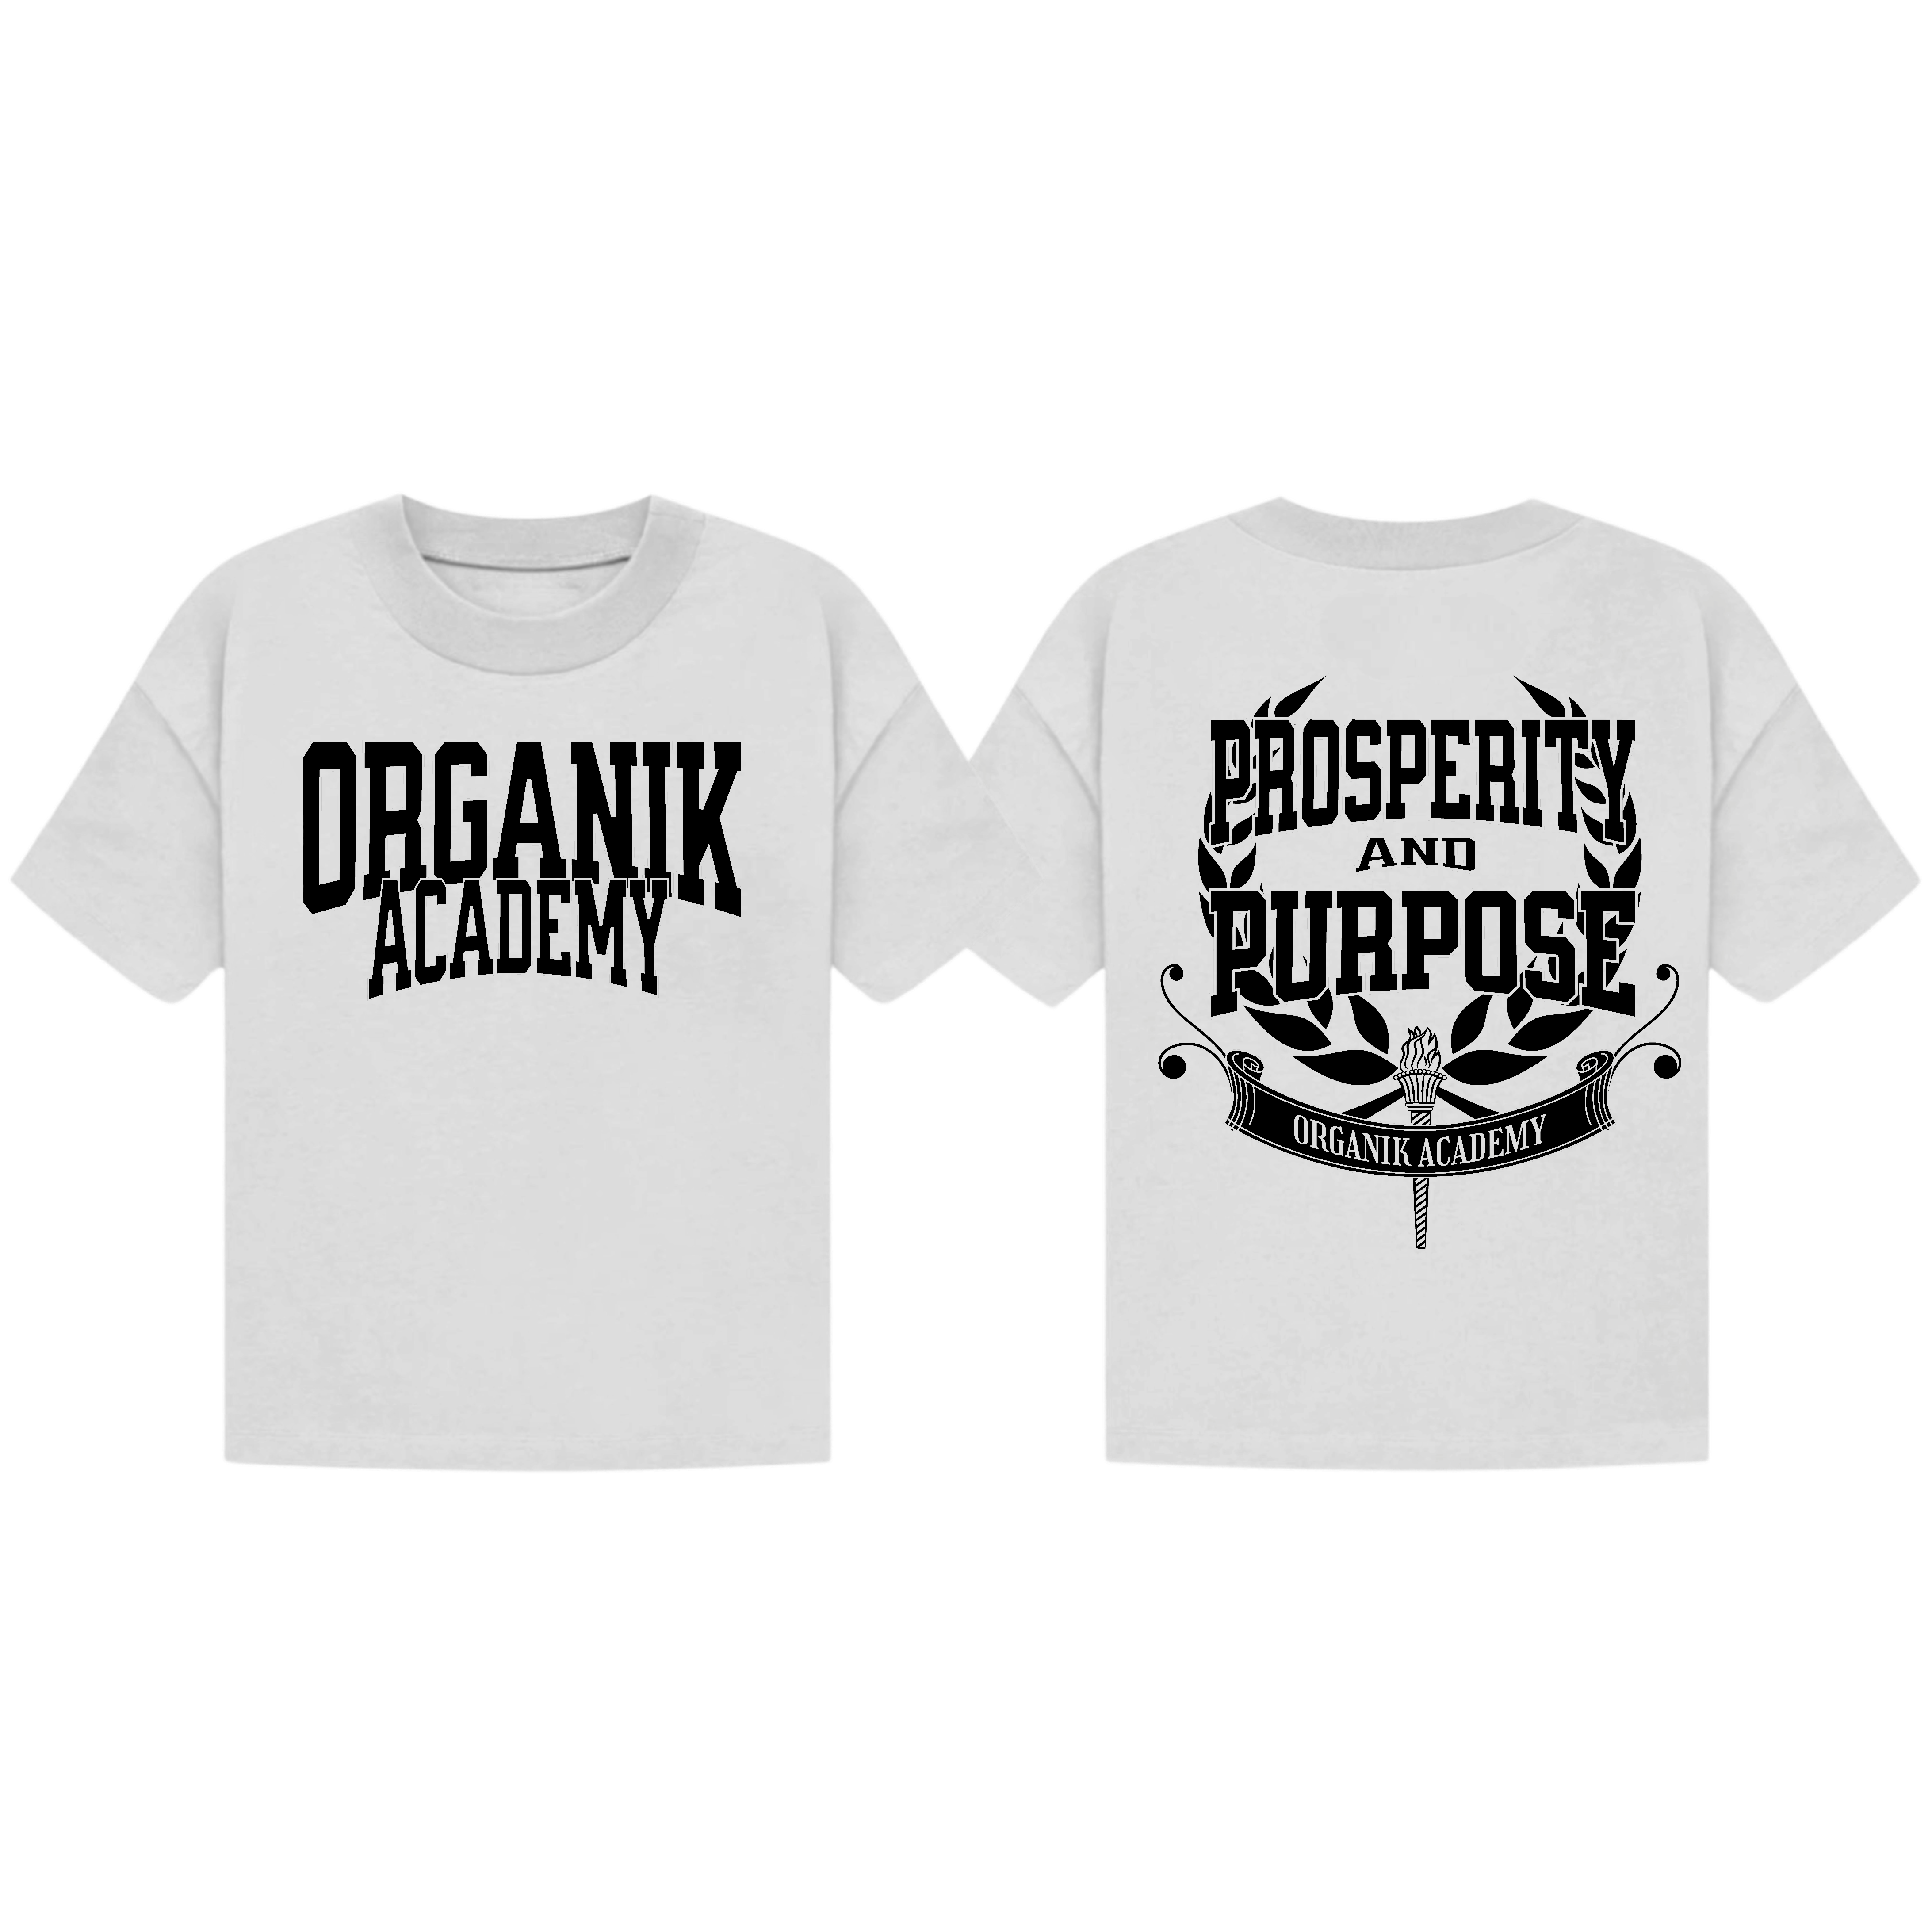 Organik Academy - Prosperity And Purpose T-Shirt